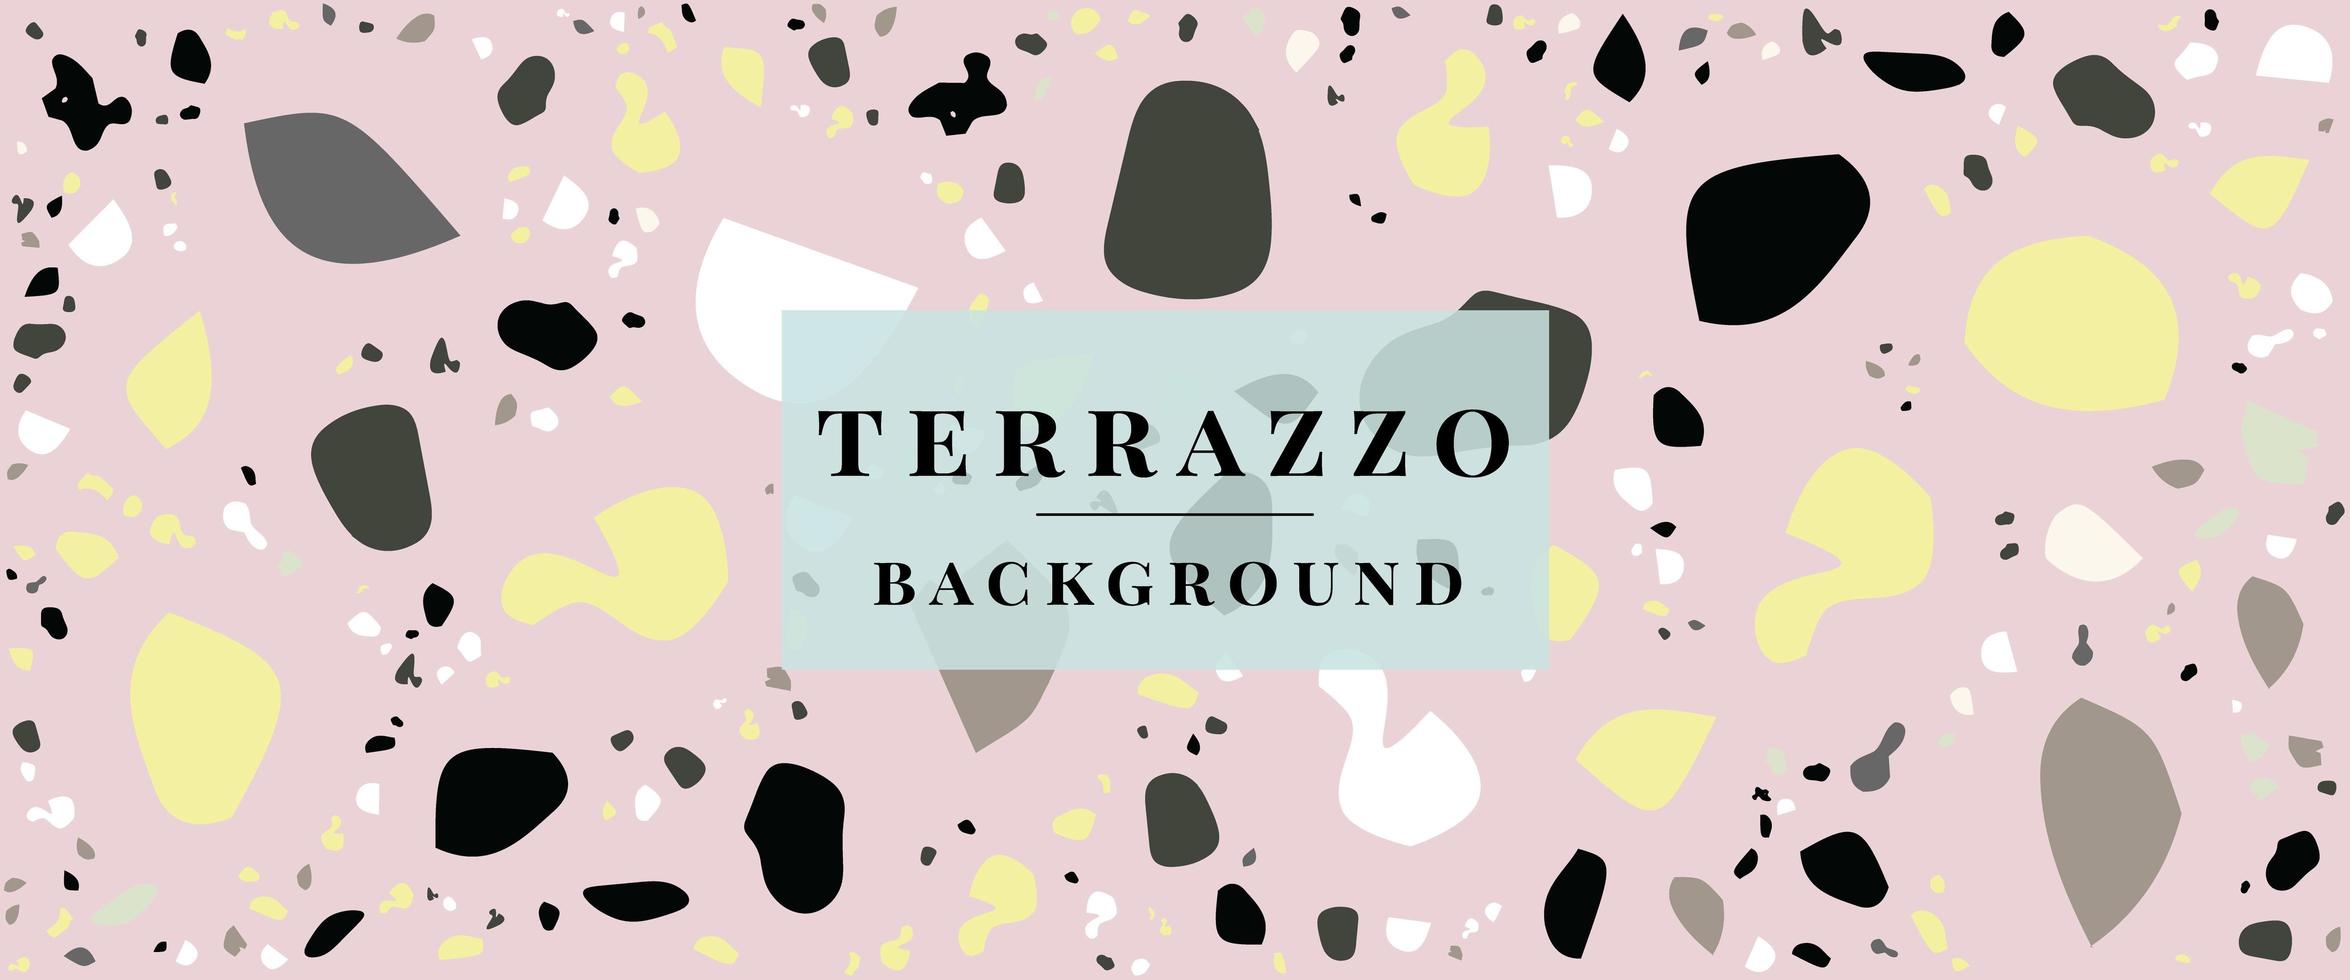 terrazzo bakgrund- terrazzo golvplattor mönster abstrakt bakgrund fri vektor